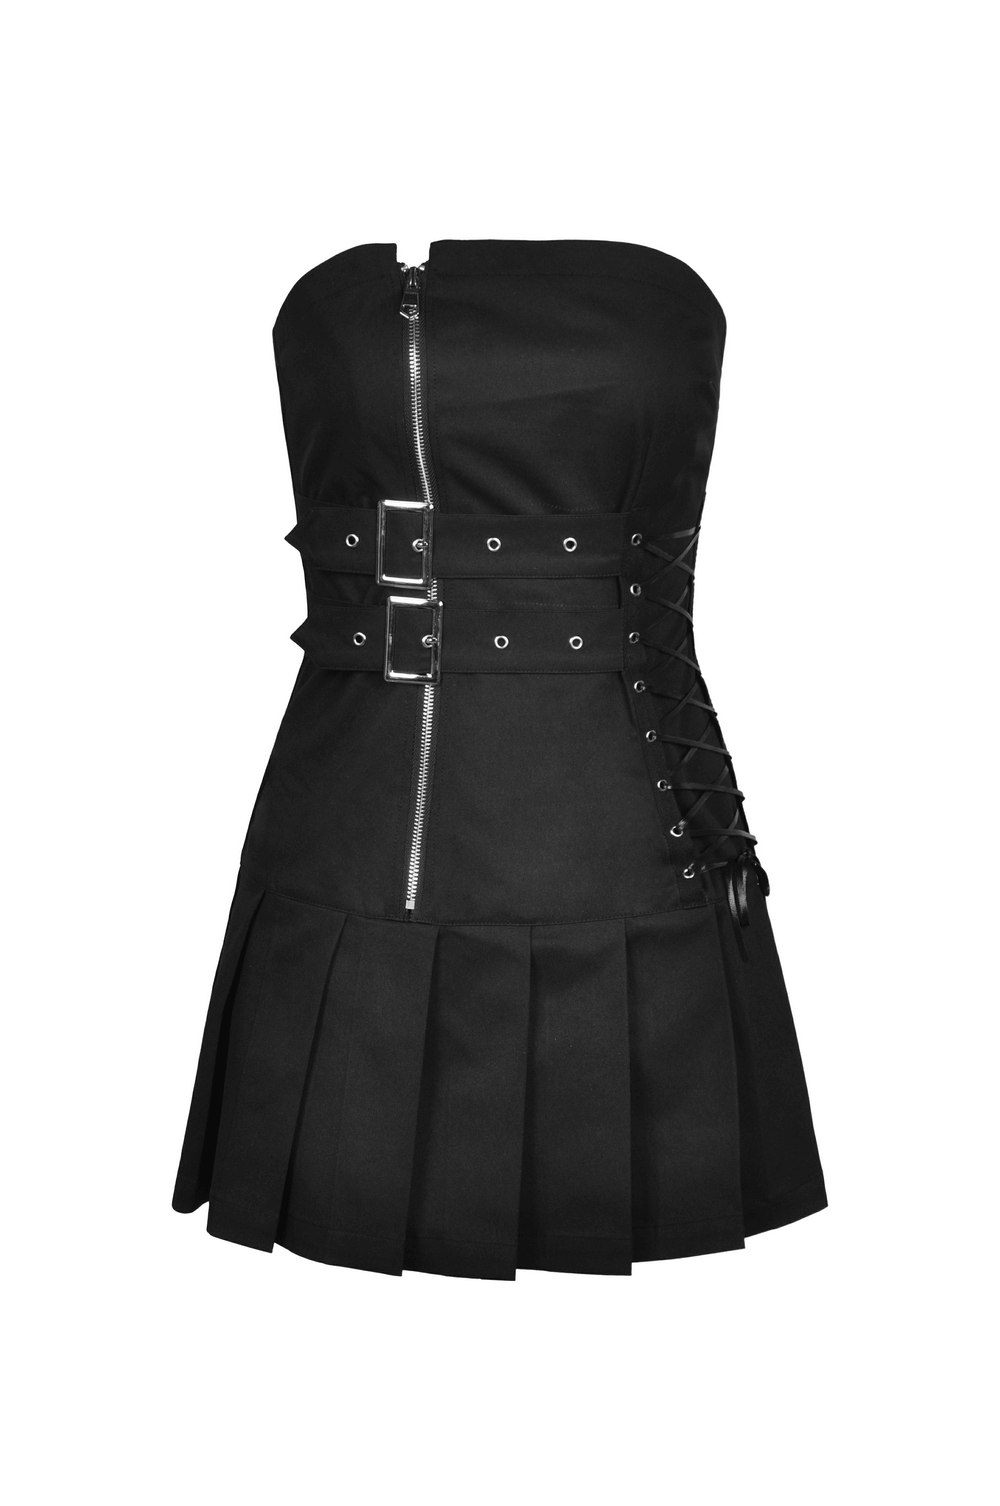 Gothic Zipper Black Mini Dress with Metal Accents